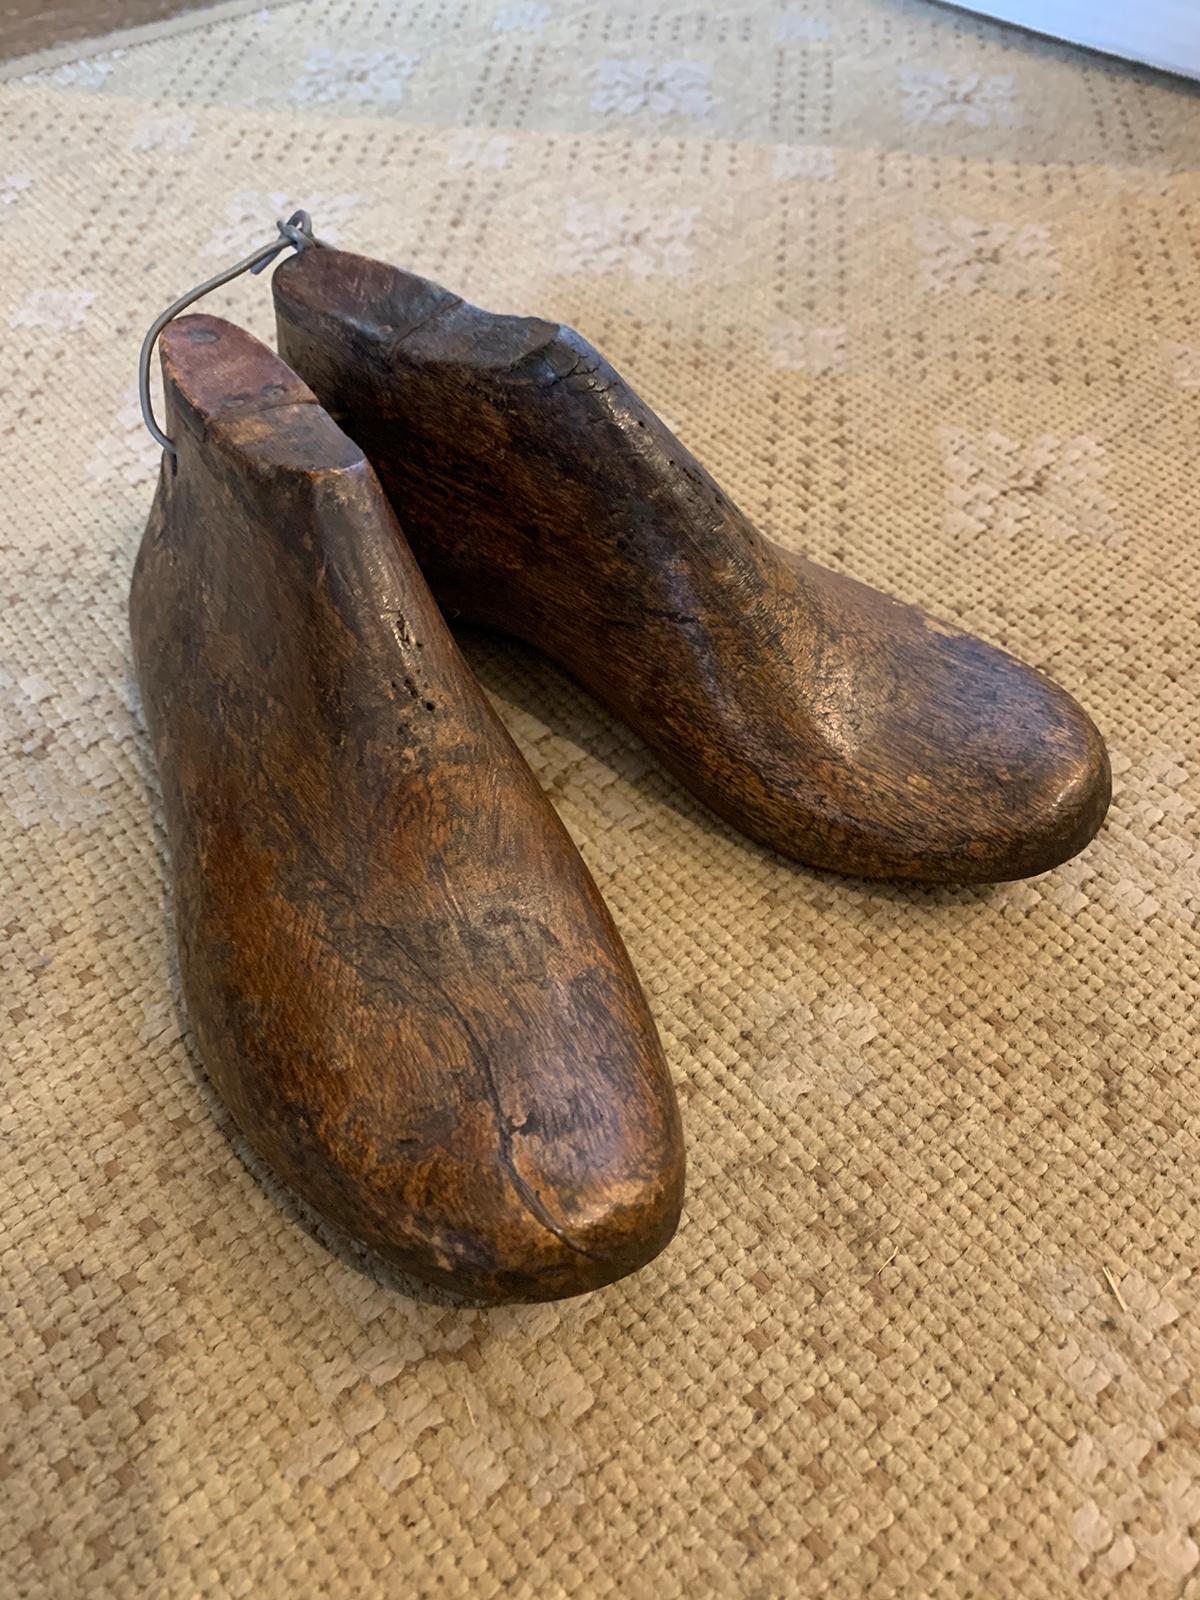 Pair of 20th century children's wooden shoe molds.